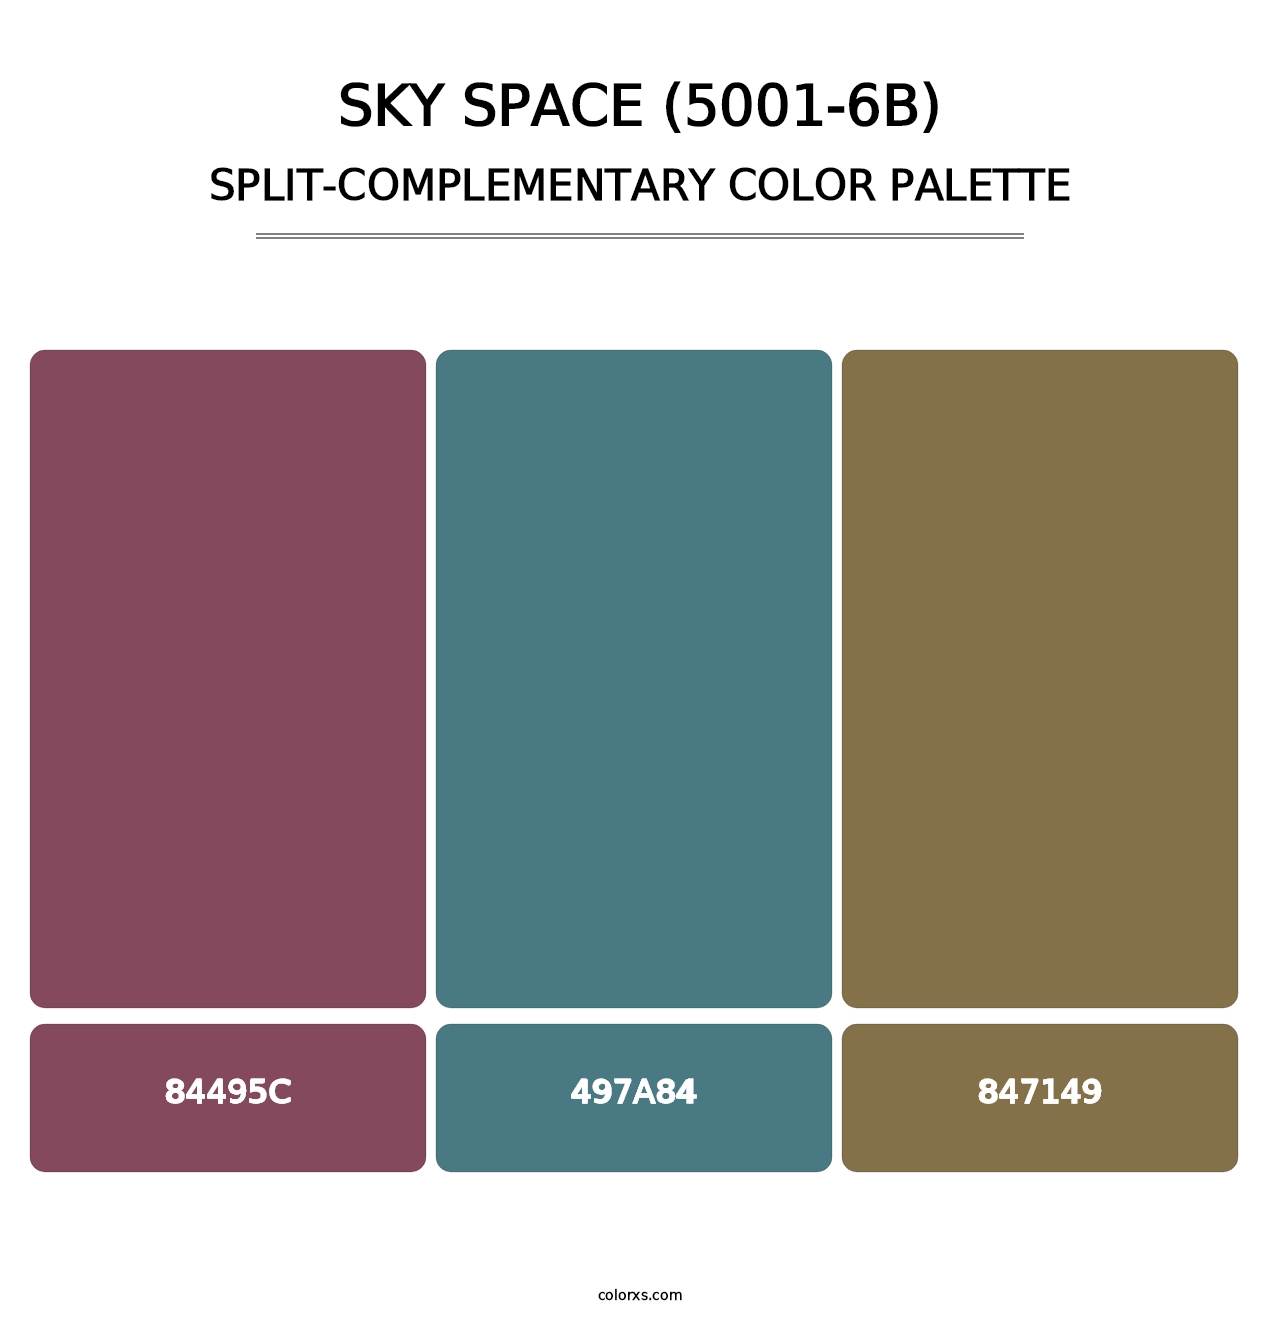 Sky Space (5001-6B) - Split-Complementary Color Palette